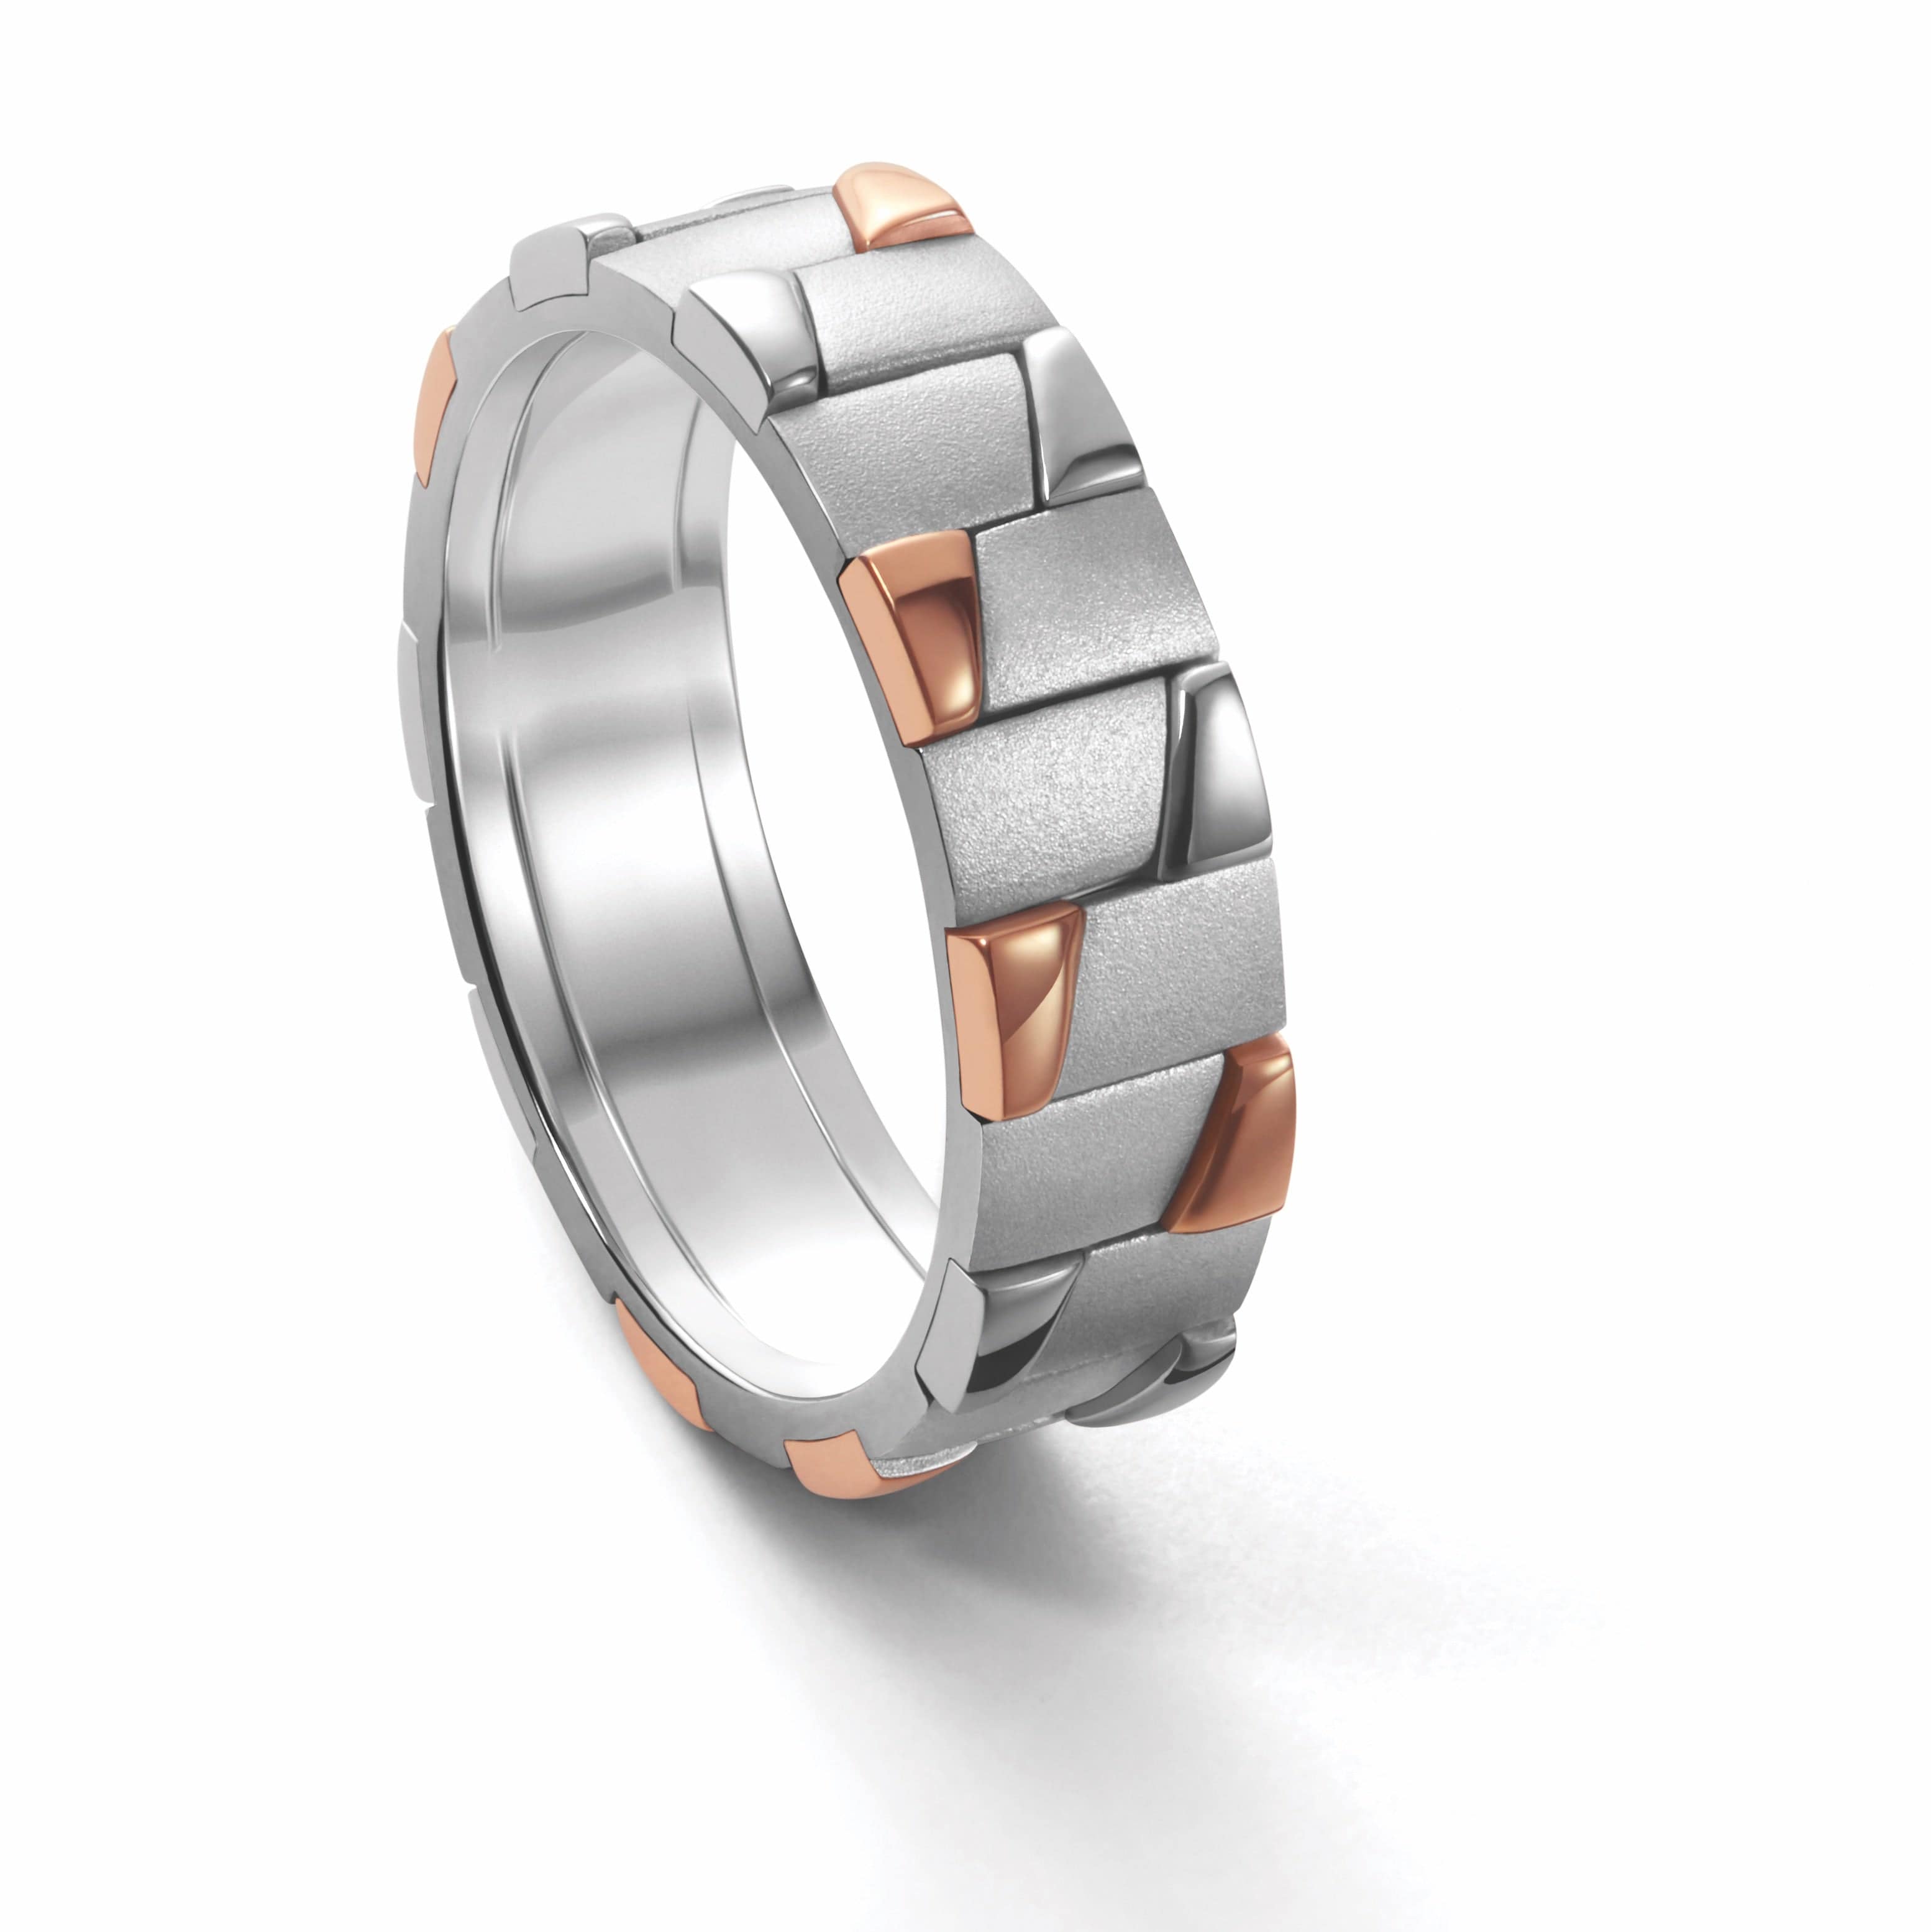 Tantalum rings | David Parums Design